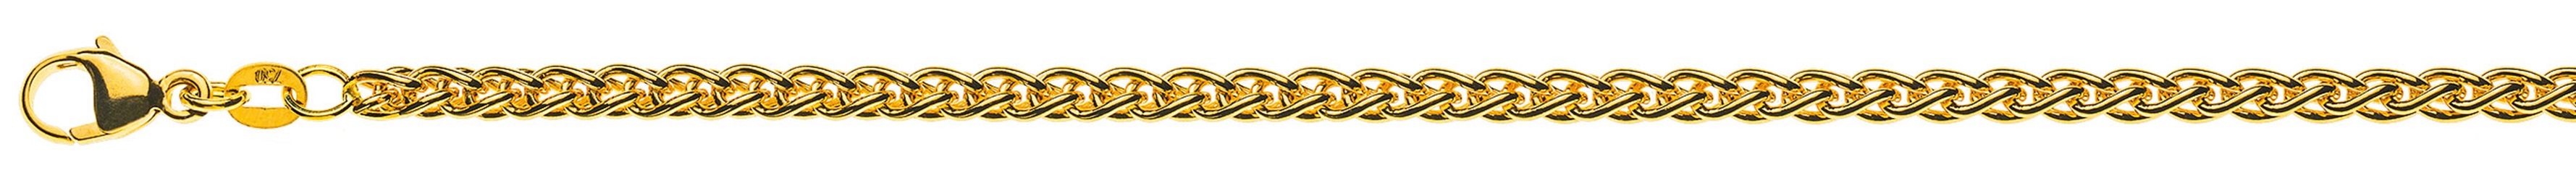 AURONOS Prestige Necklace yellow gold 18K cable chain 50cm 3.3mm